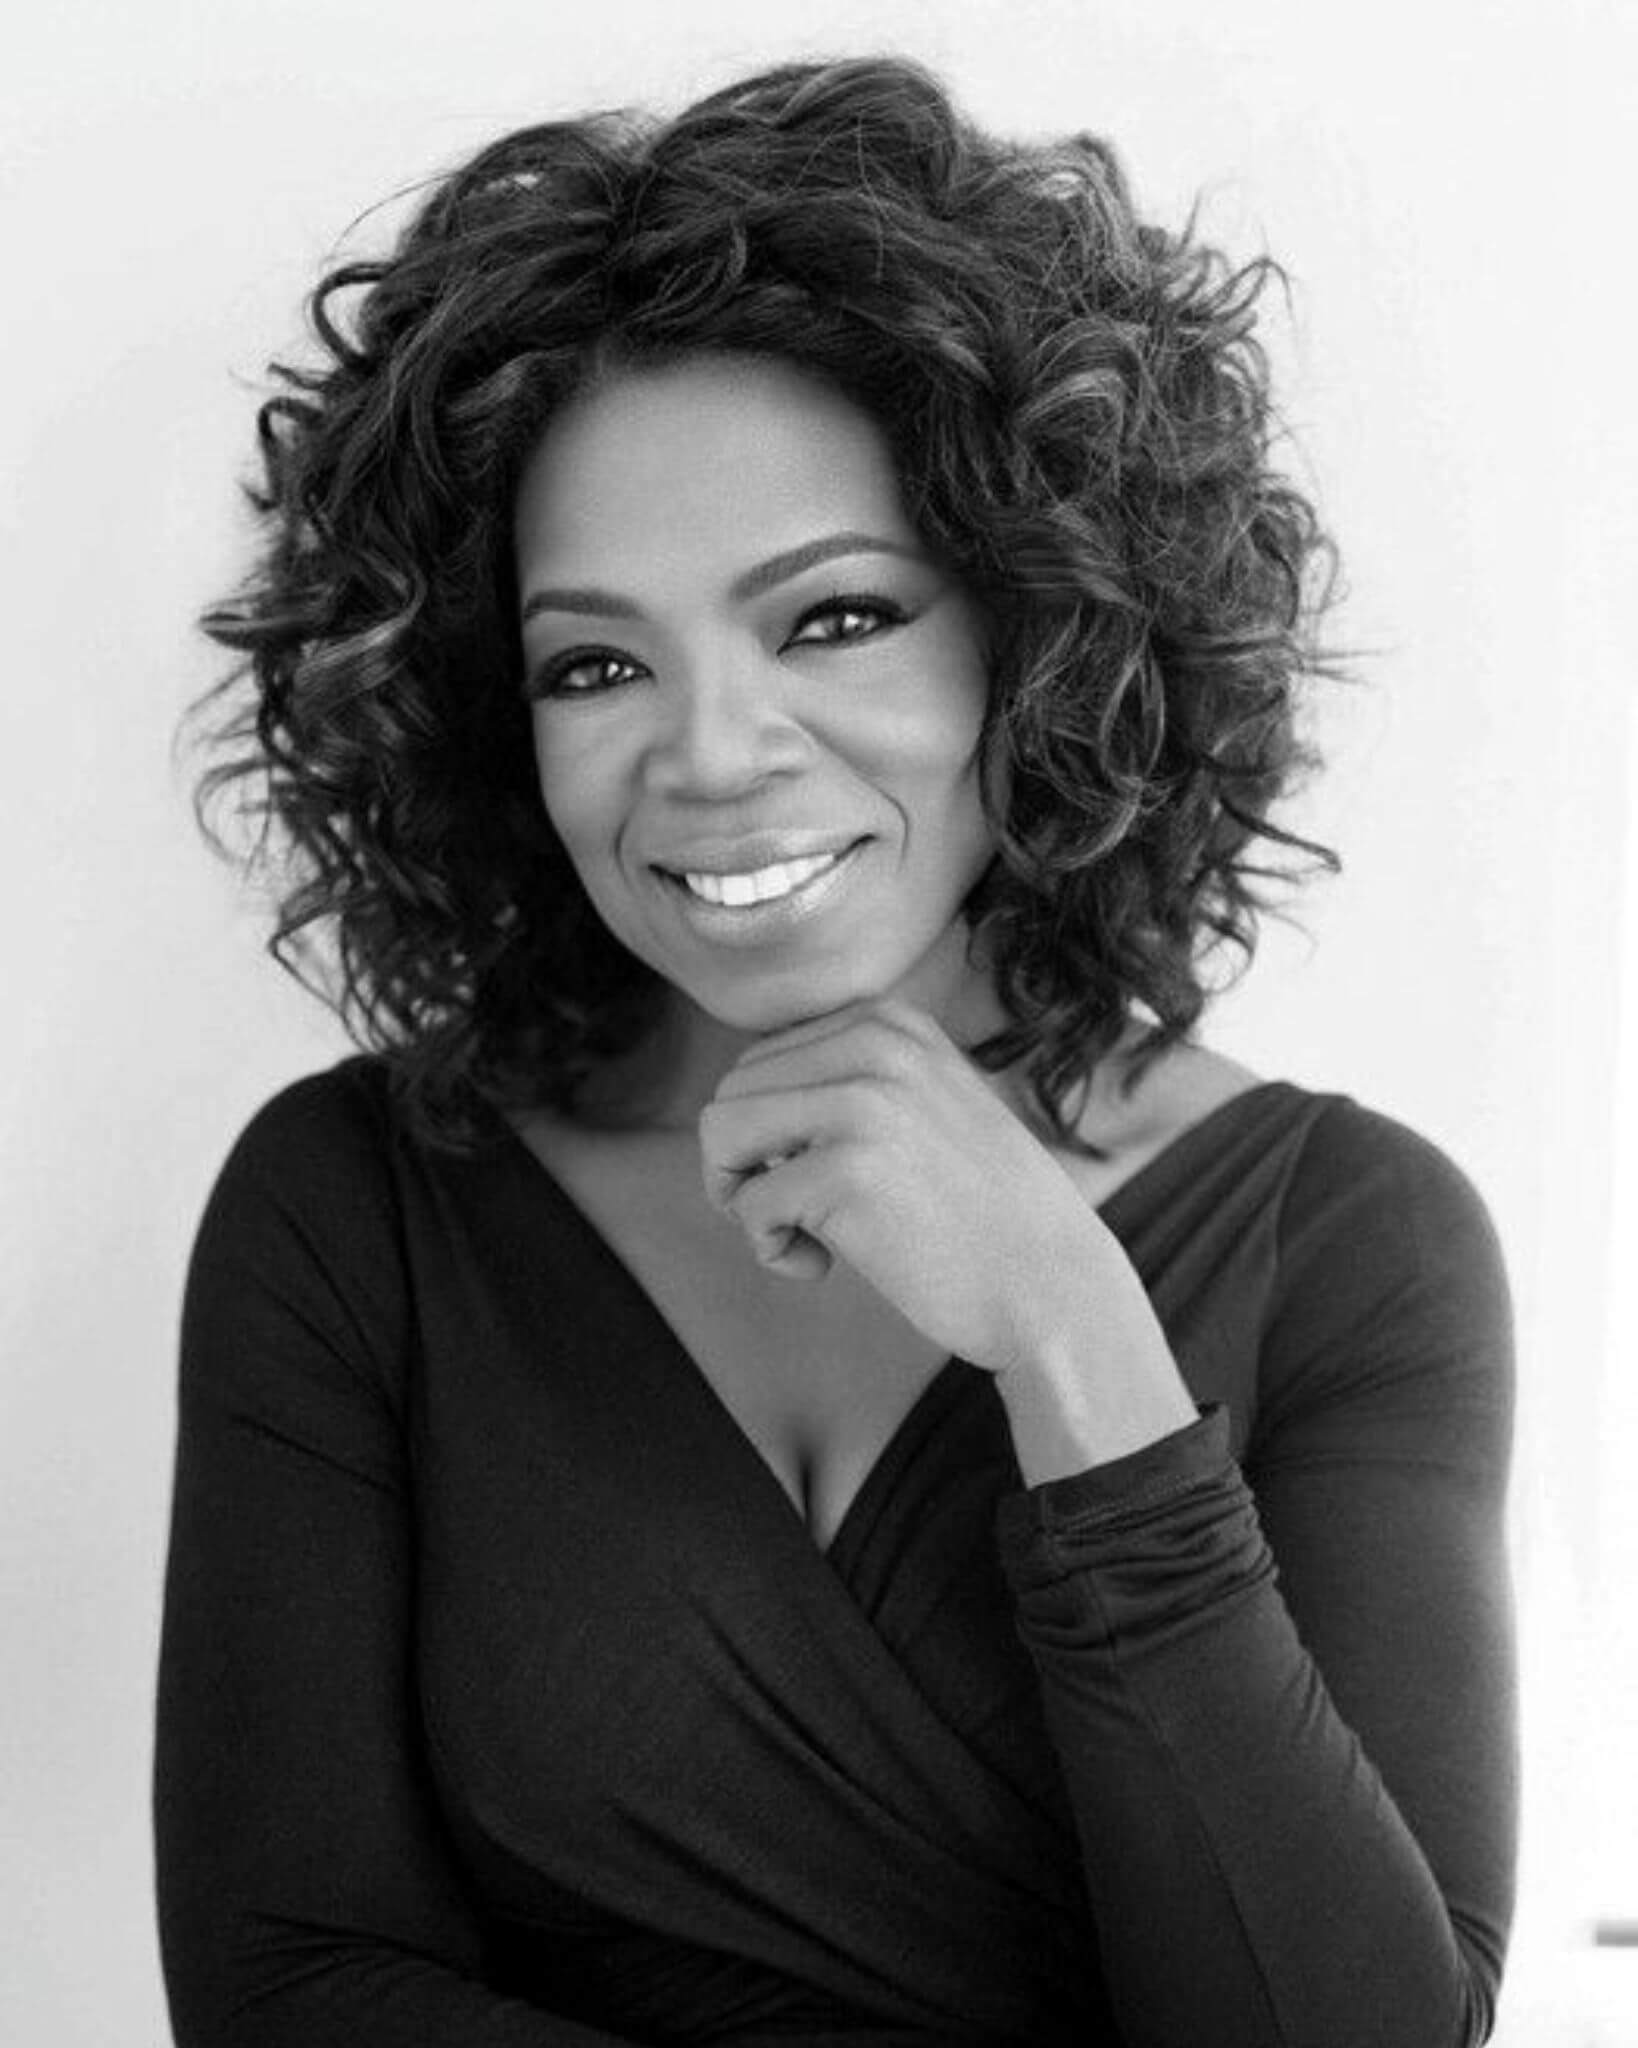 Who Is Oprah Winfrey?